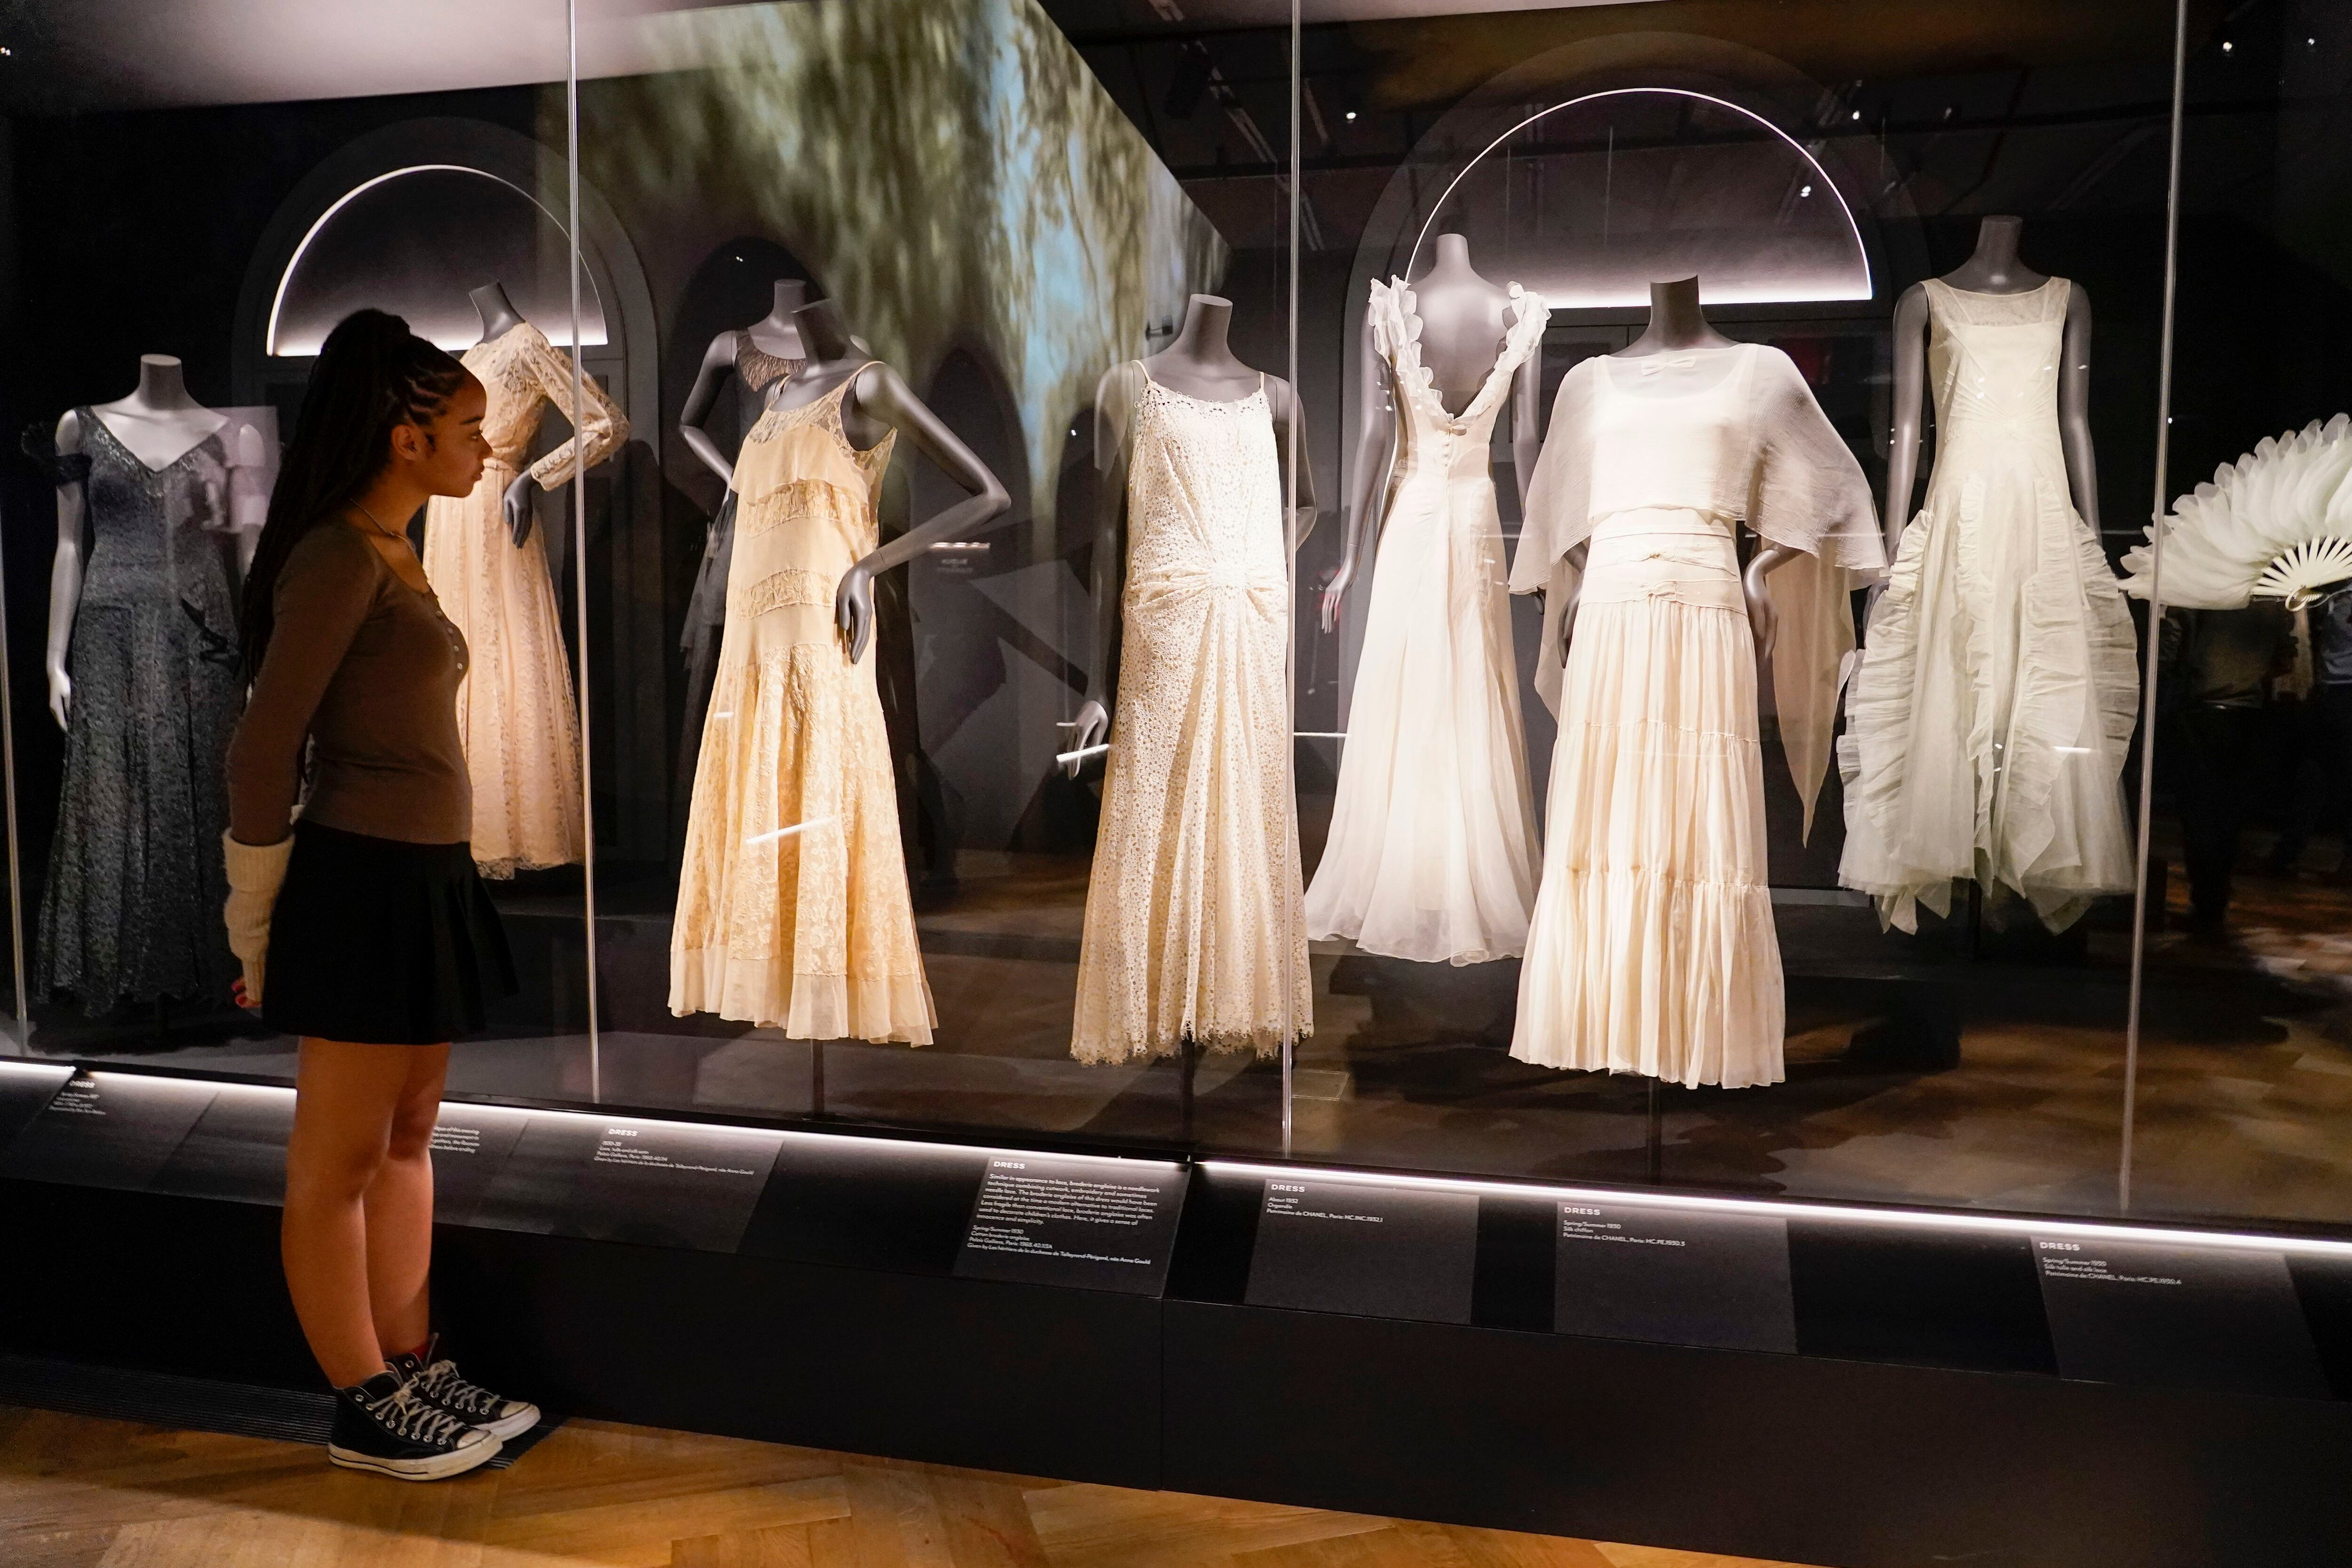 Gabrielle Chanel Fashion Manifesto: a new exhibition opens in Paris — Leah  Van Loon